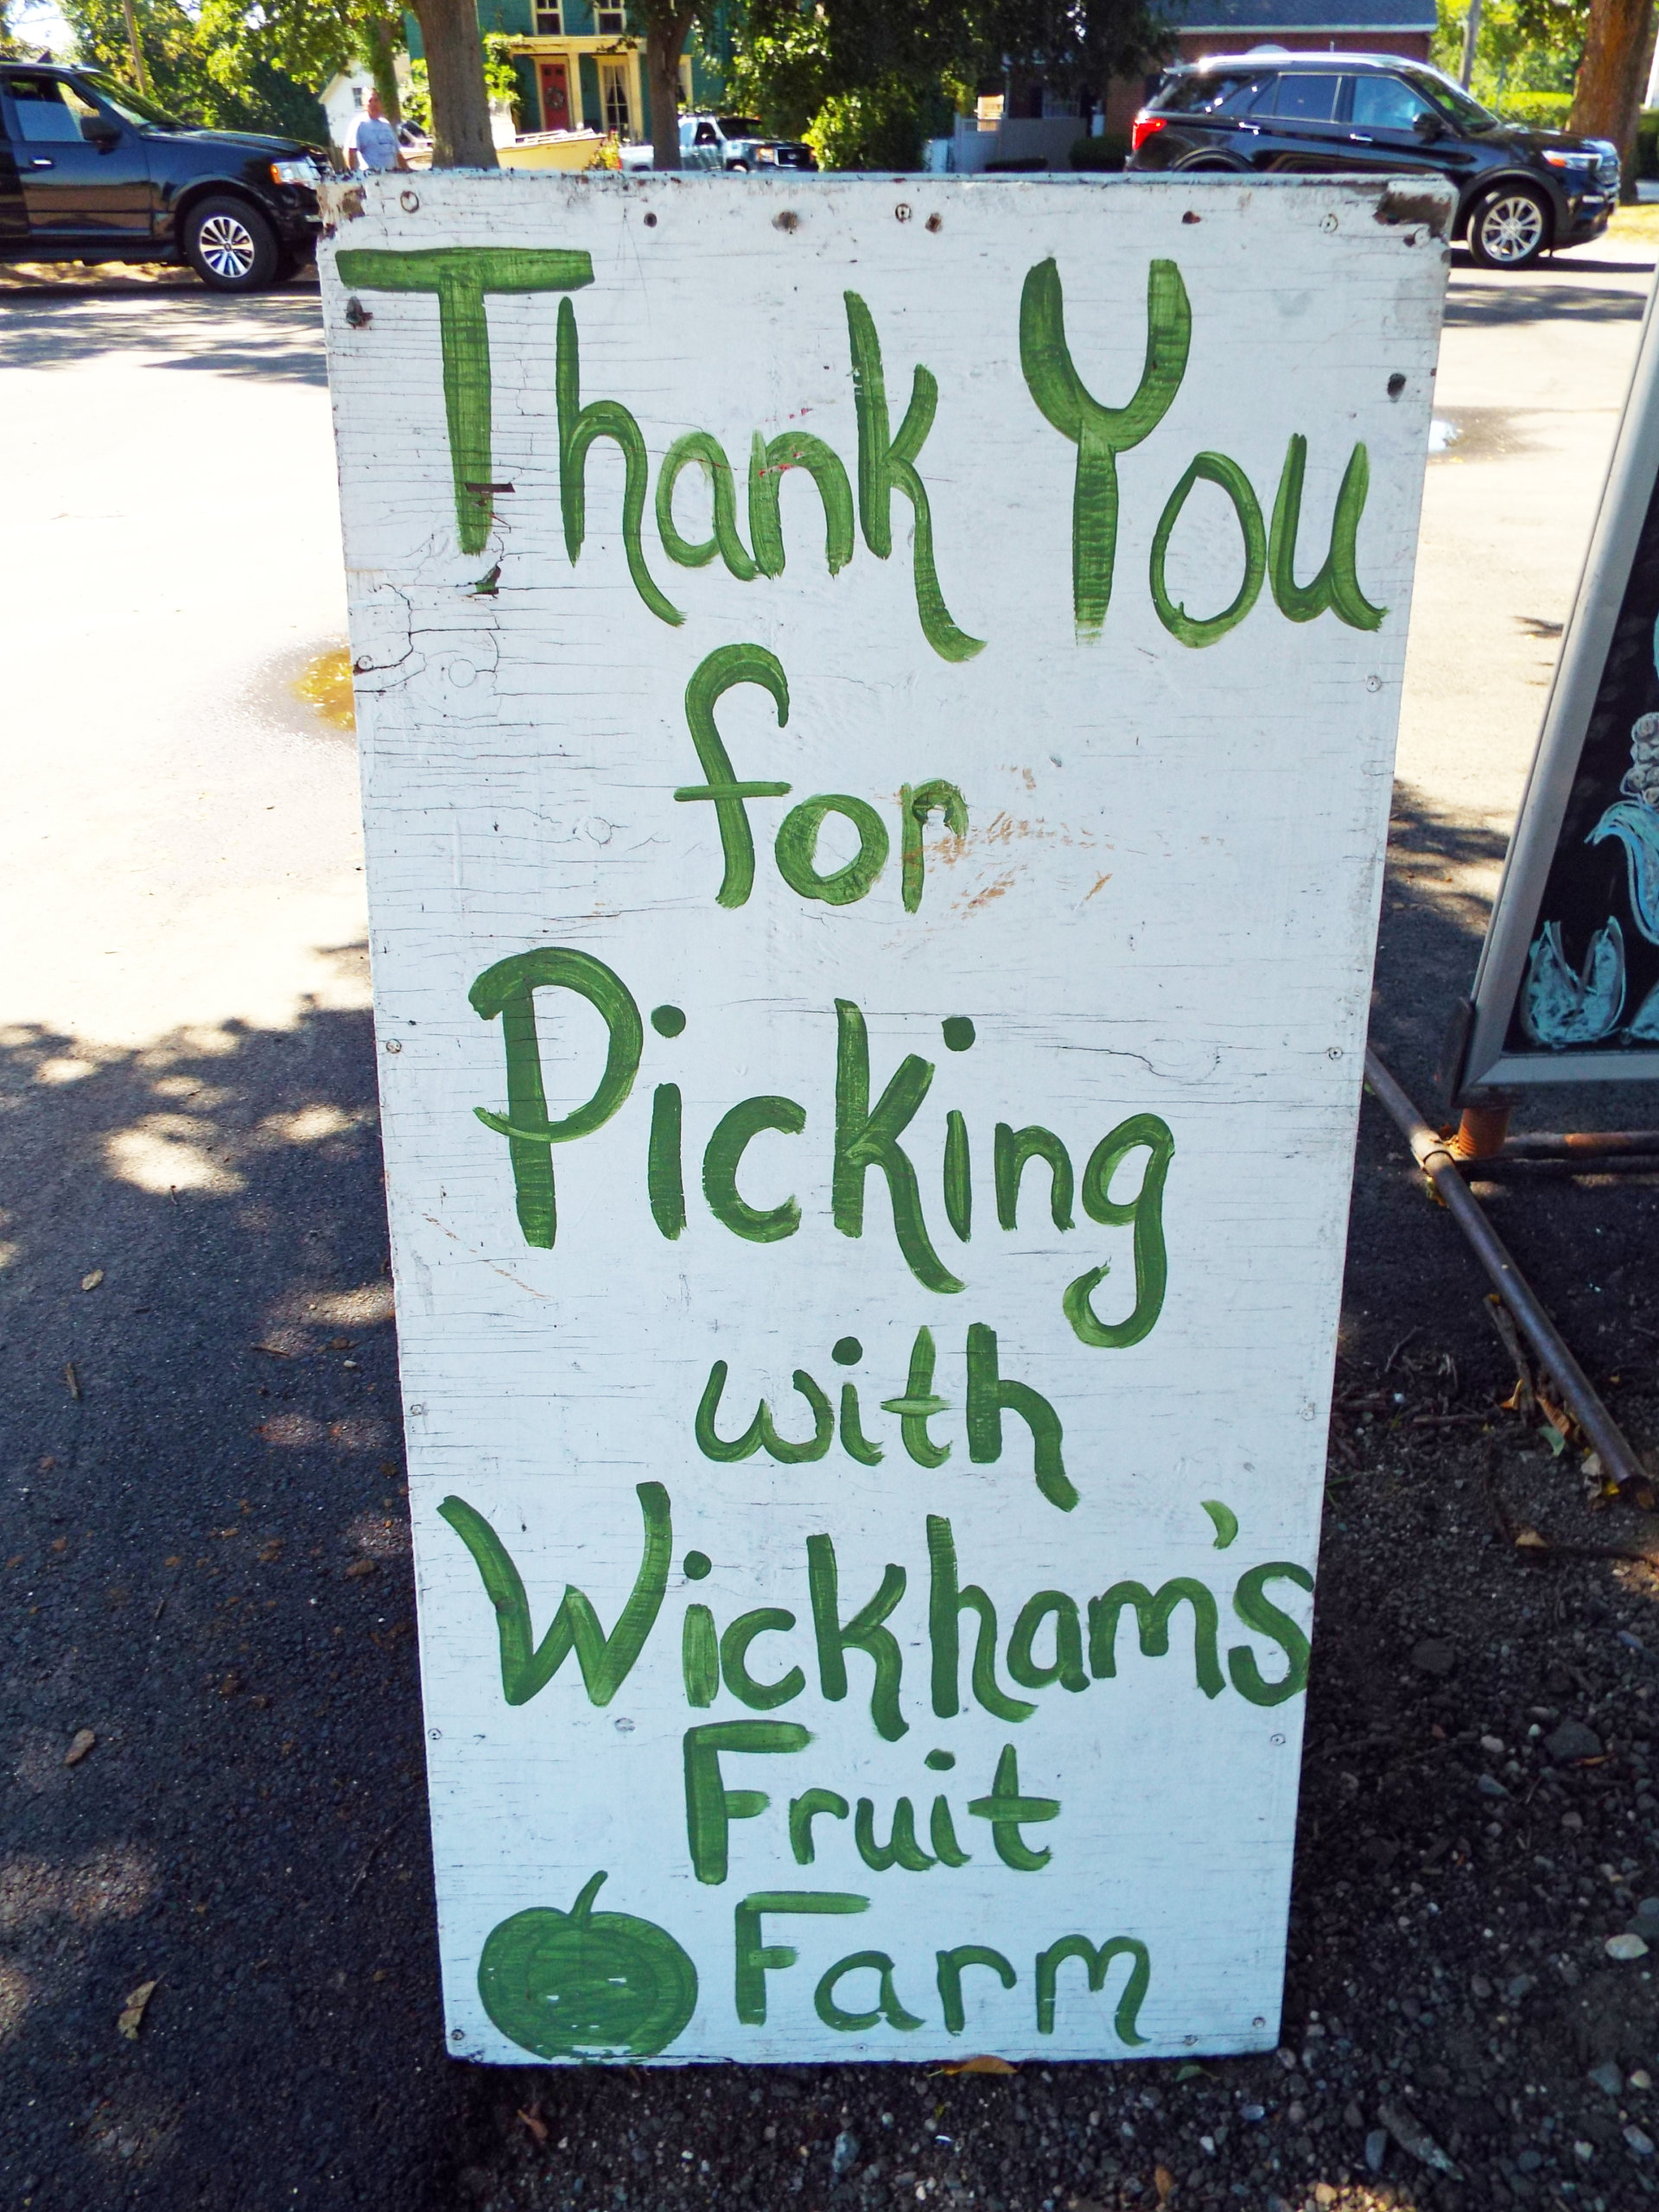 Wickham's Fruit Farm U-pick sign